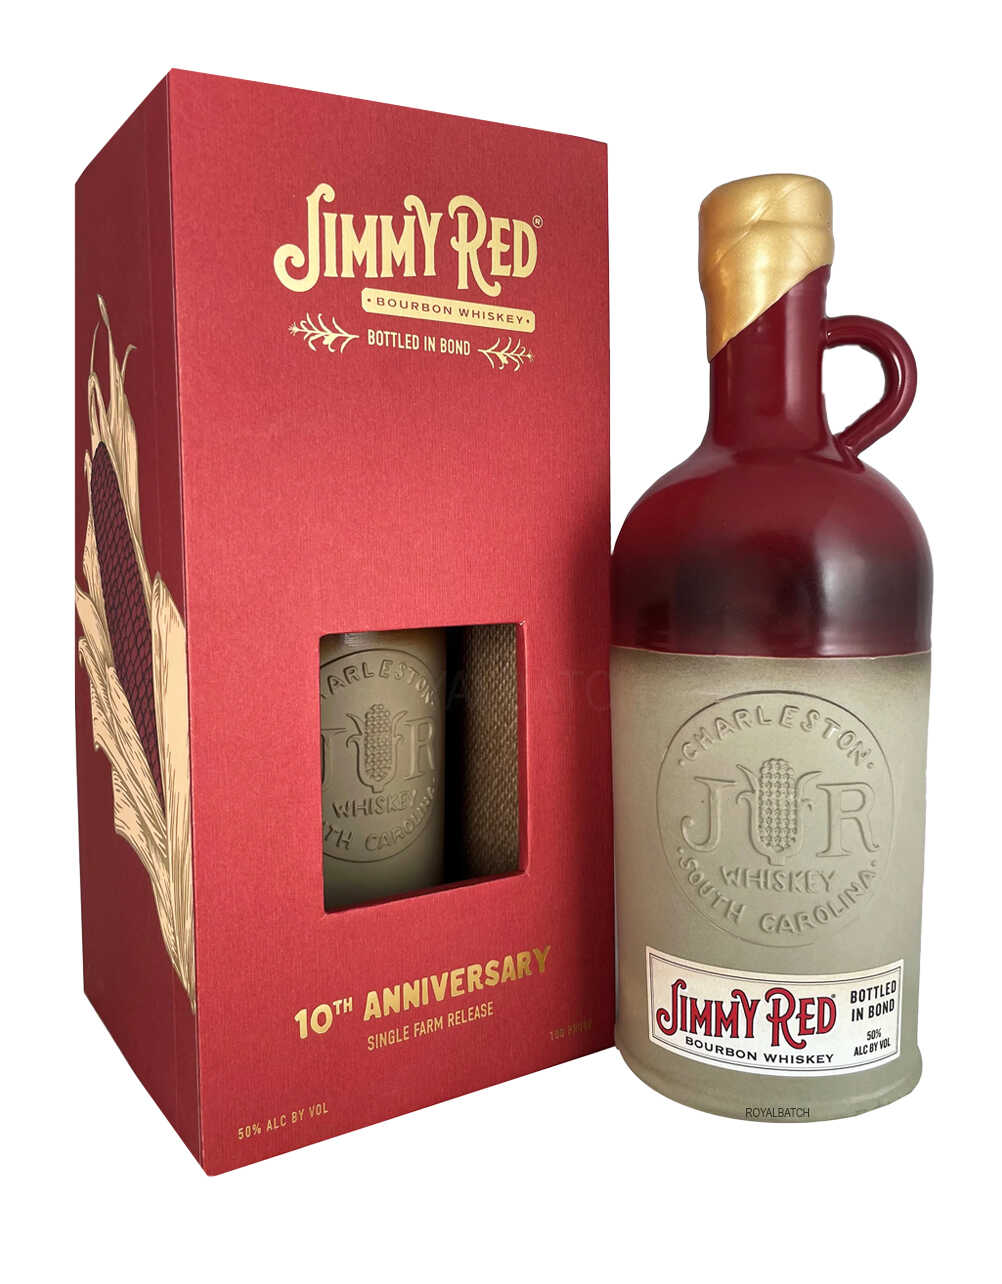 Jimmy Red 10th Anniversary Bottled in Bond Bourbon Whiskey